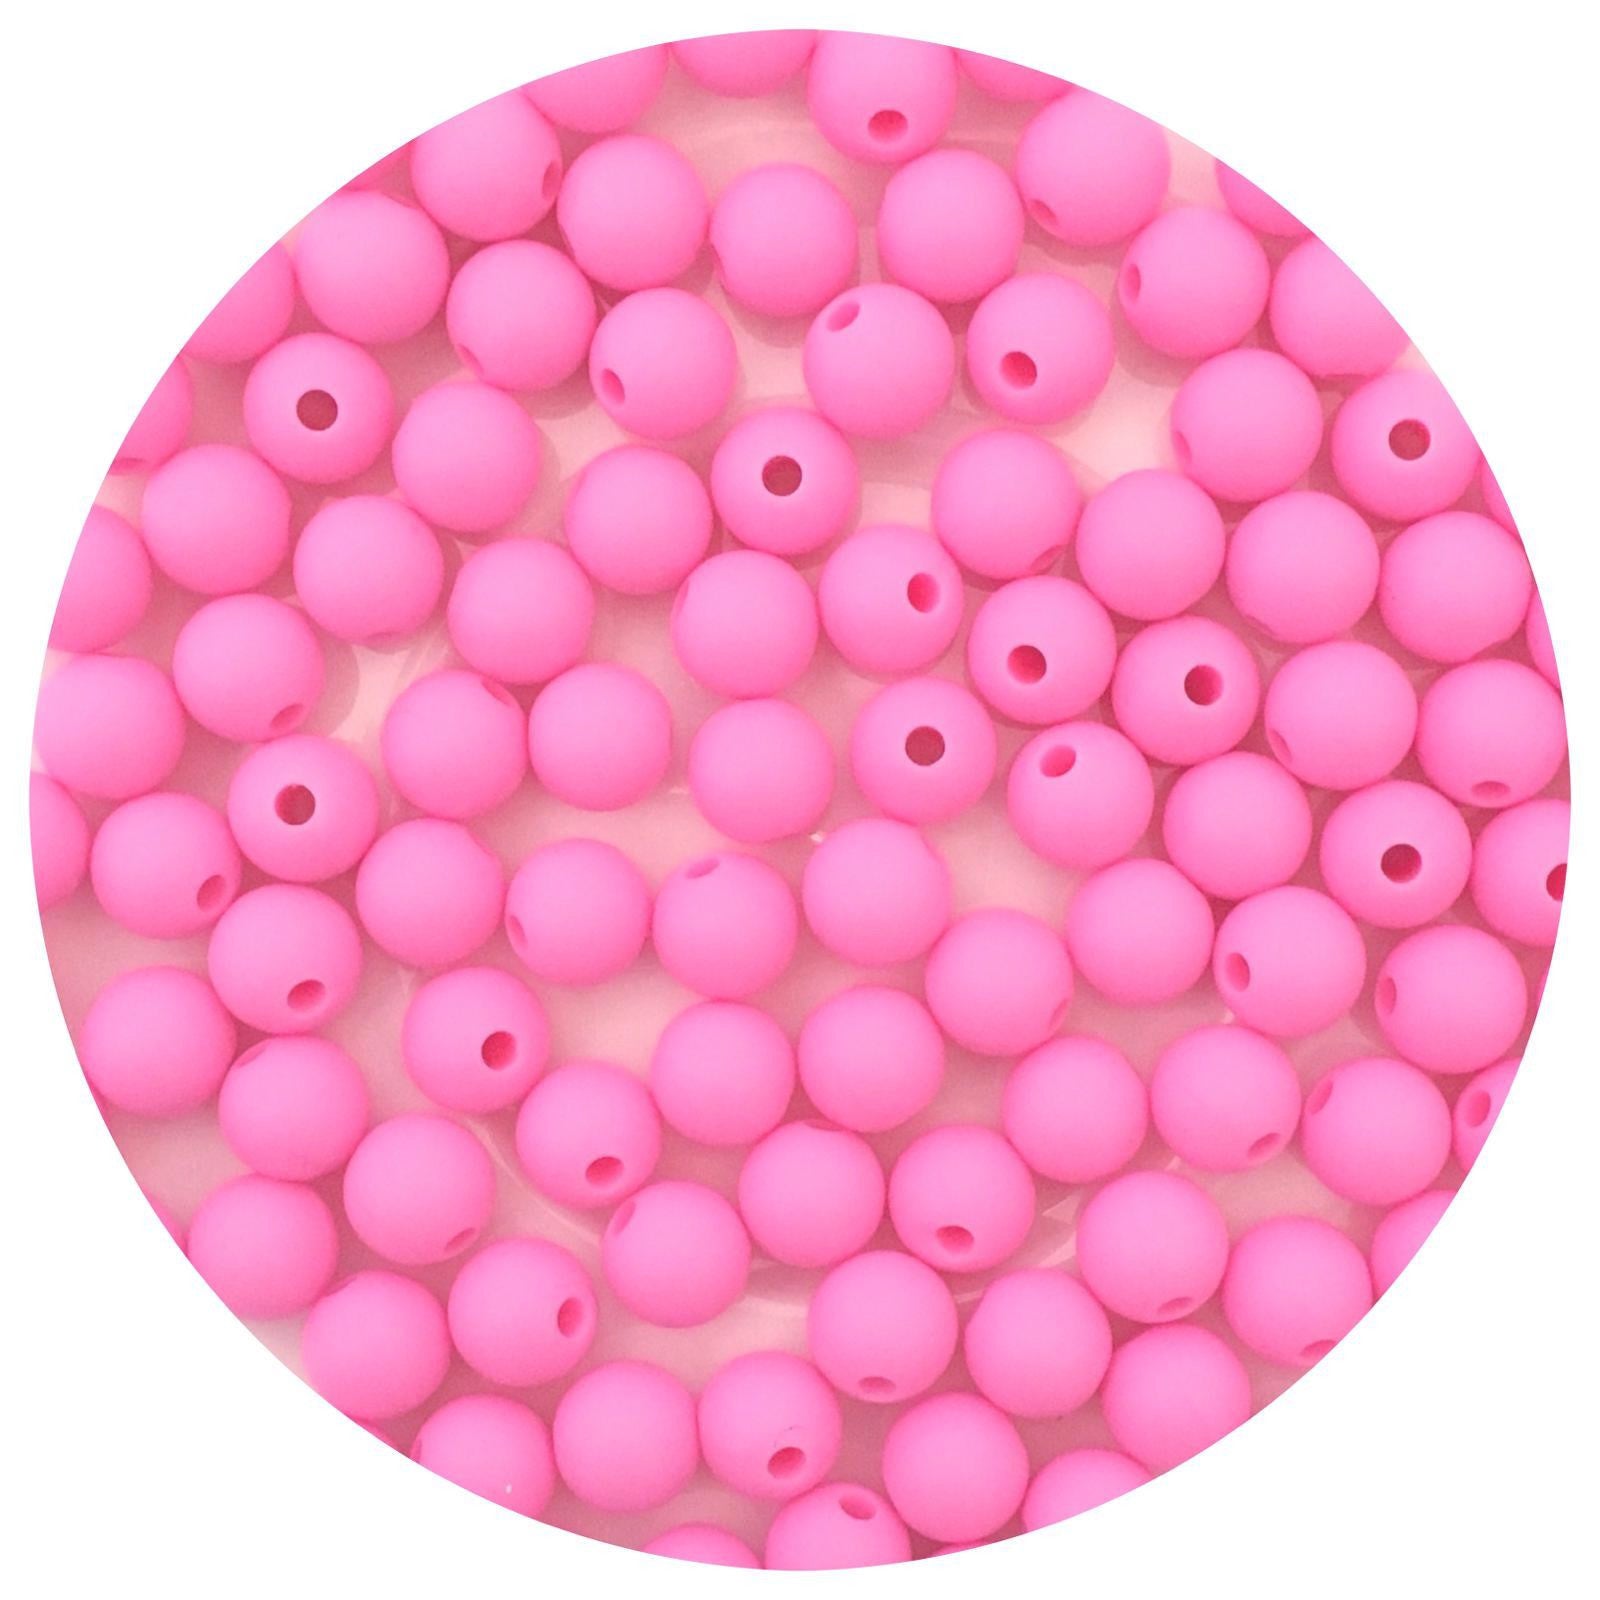 Bubblegum Pink - 9mm Round Silicone Beads - 5 Beads